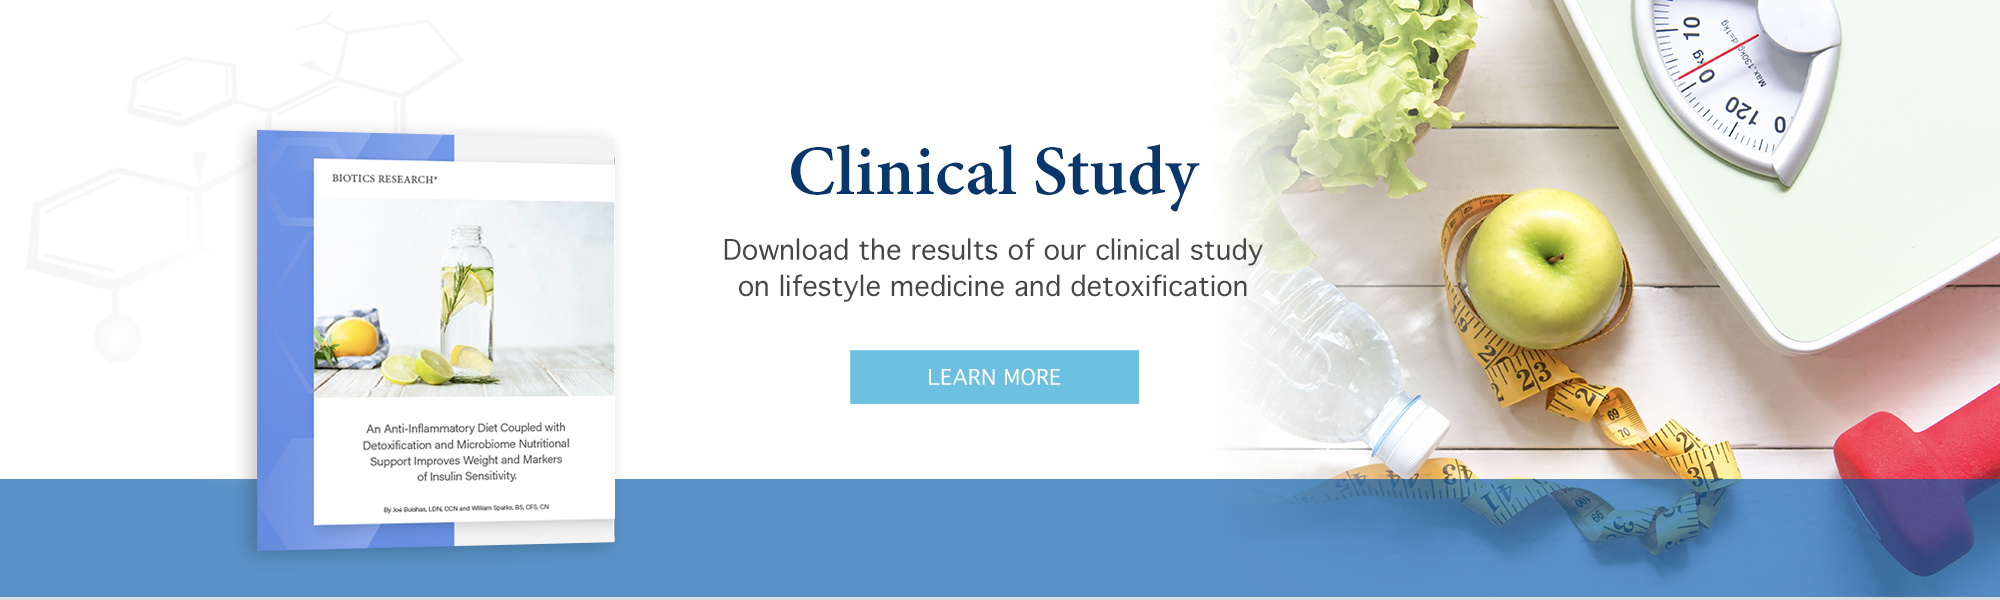 ClinicalStudy_Banner